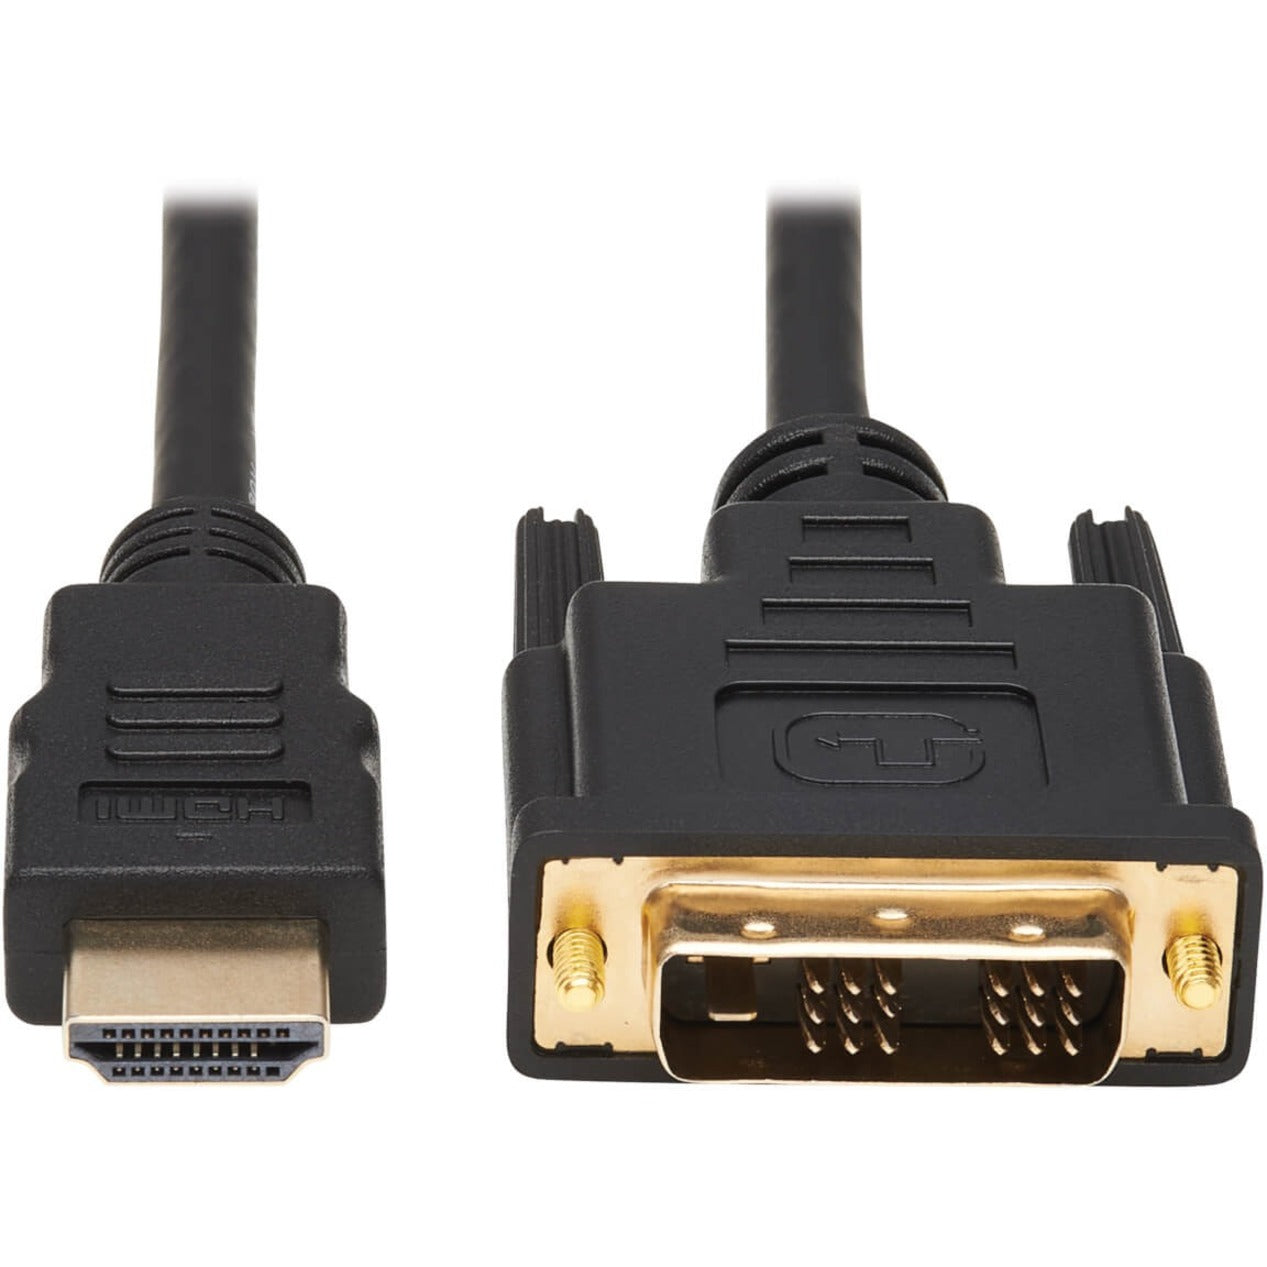 Tripp Lite P566-010 Gold Digital Video Cable, 10 ft HDMI to DVI Male, Copper Conductor